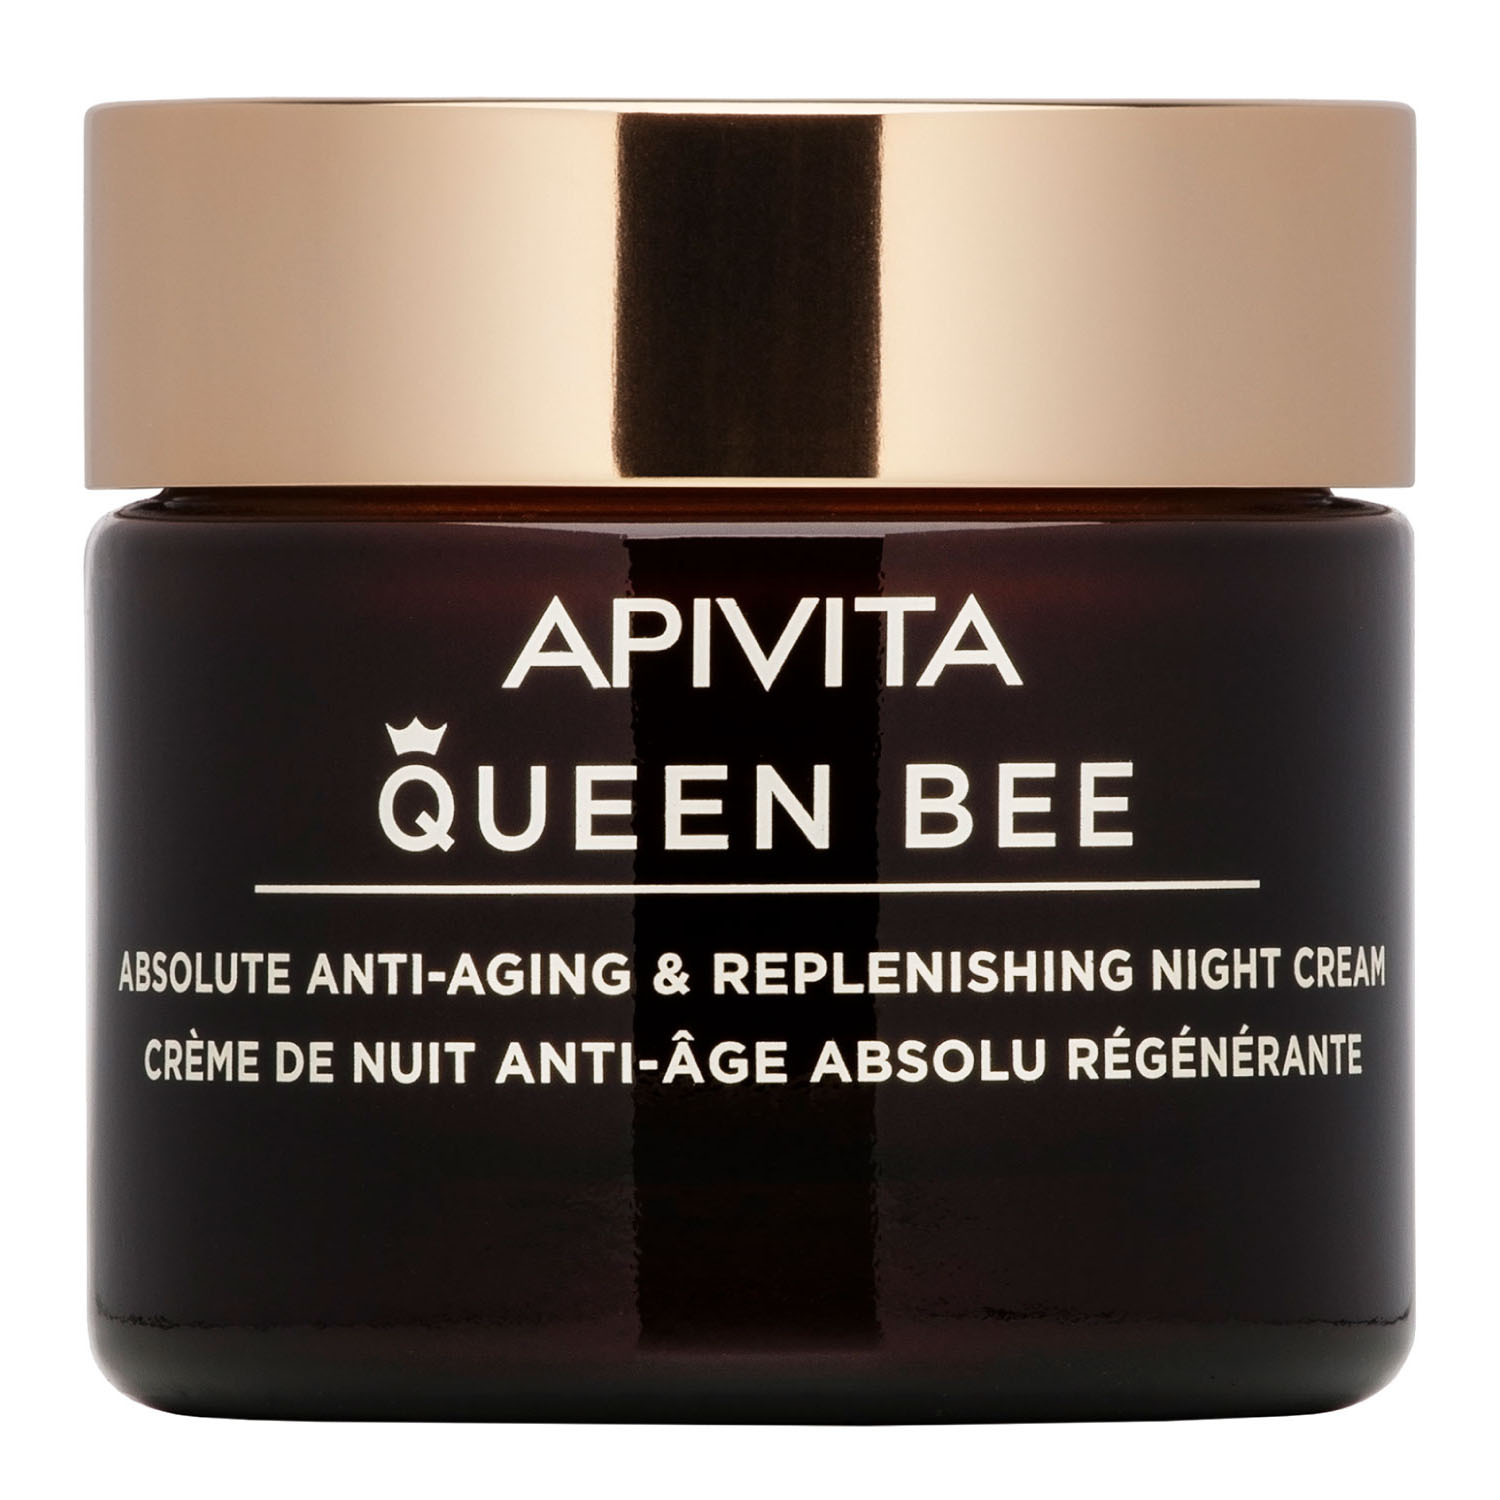 Apivita Комплексный восстанавливающий ночной крем, 50 мл (Apivita, Queen Bee) apivita уход queen bee комплексный для кожи вокруг глаз флакон помпа 15 мл